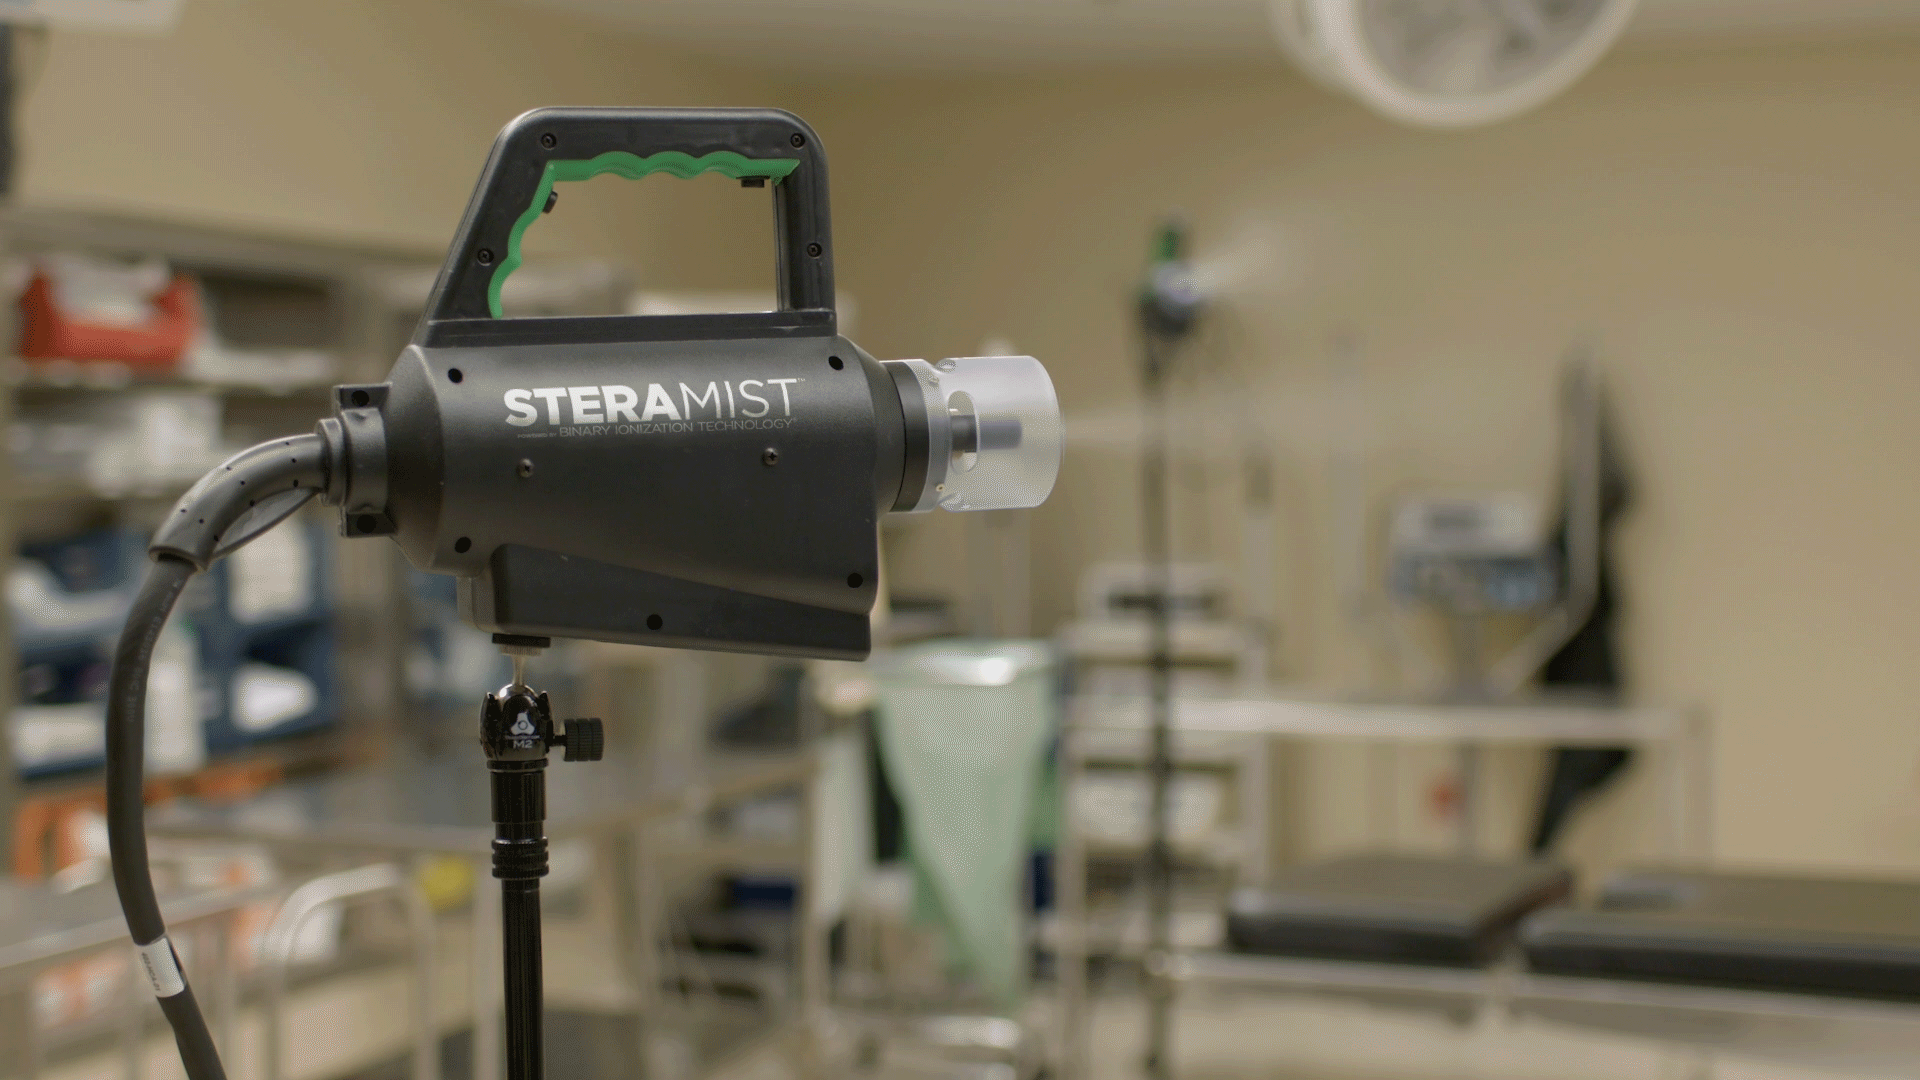 SteraMist Unit for Coronavirus Cleaning